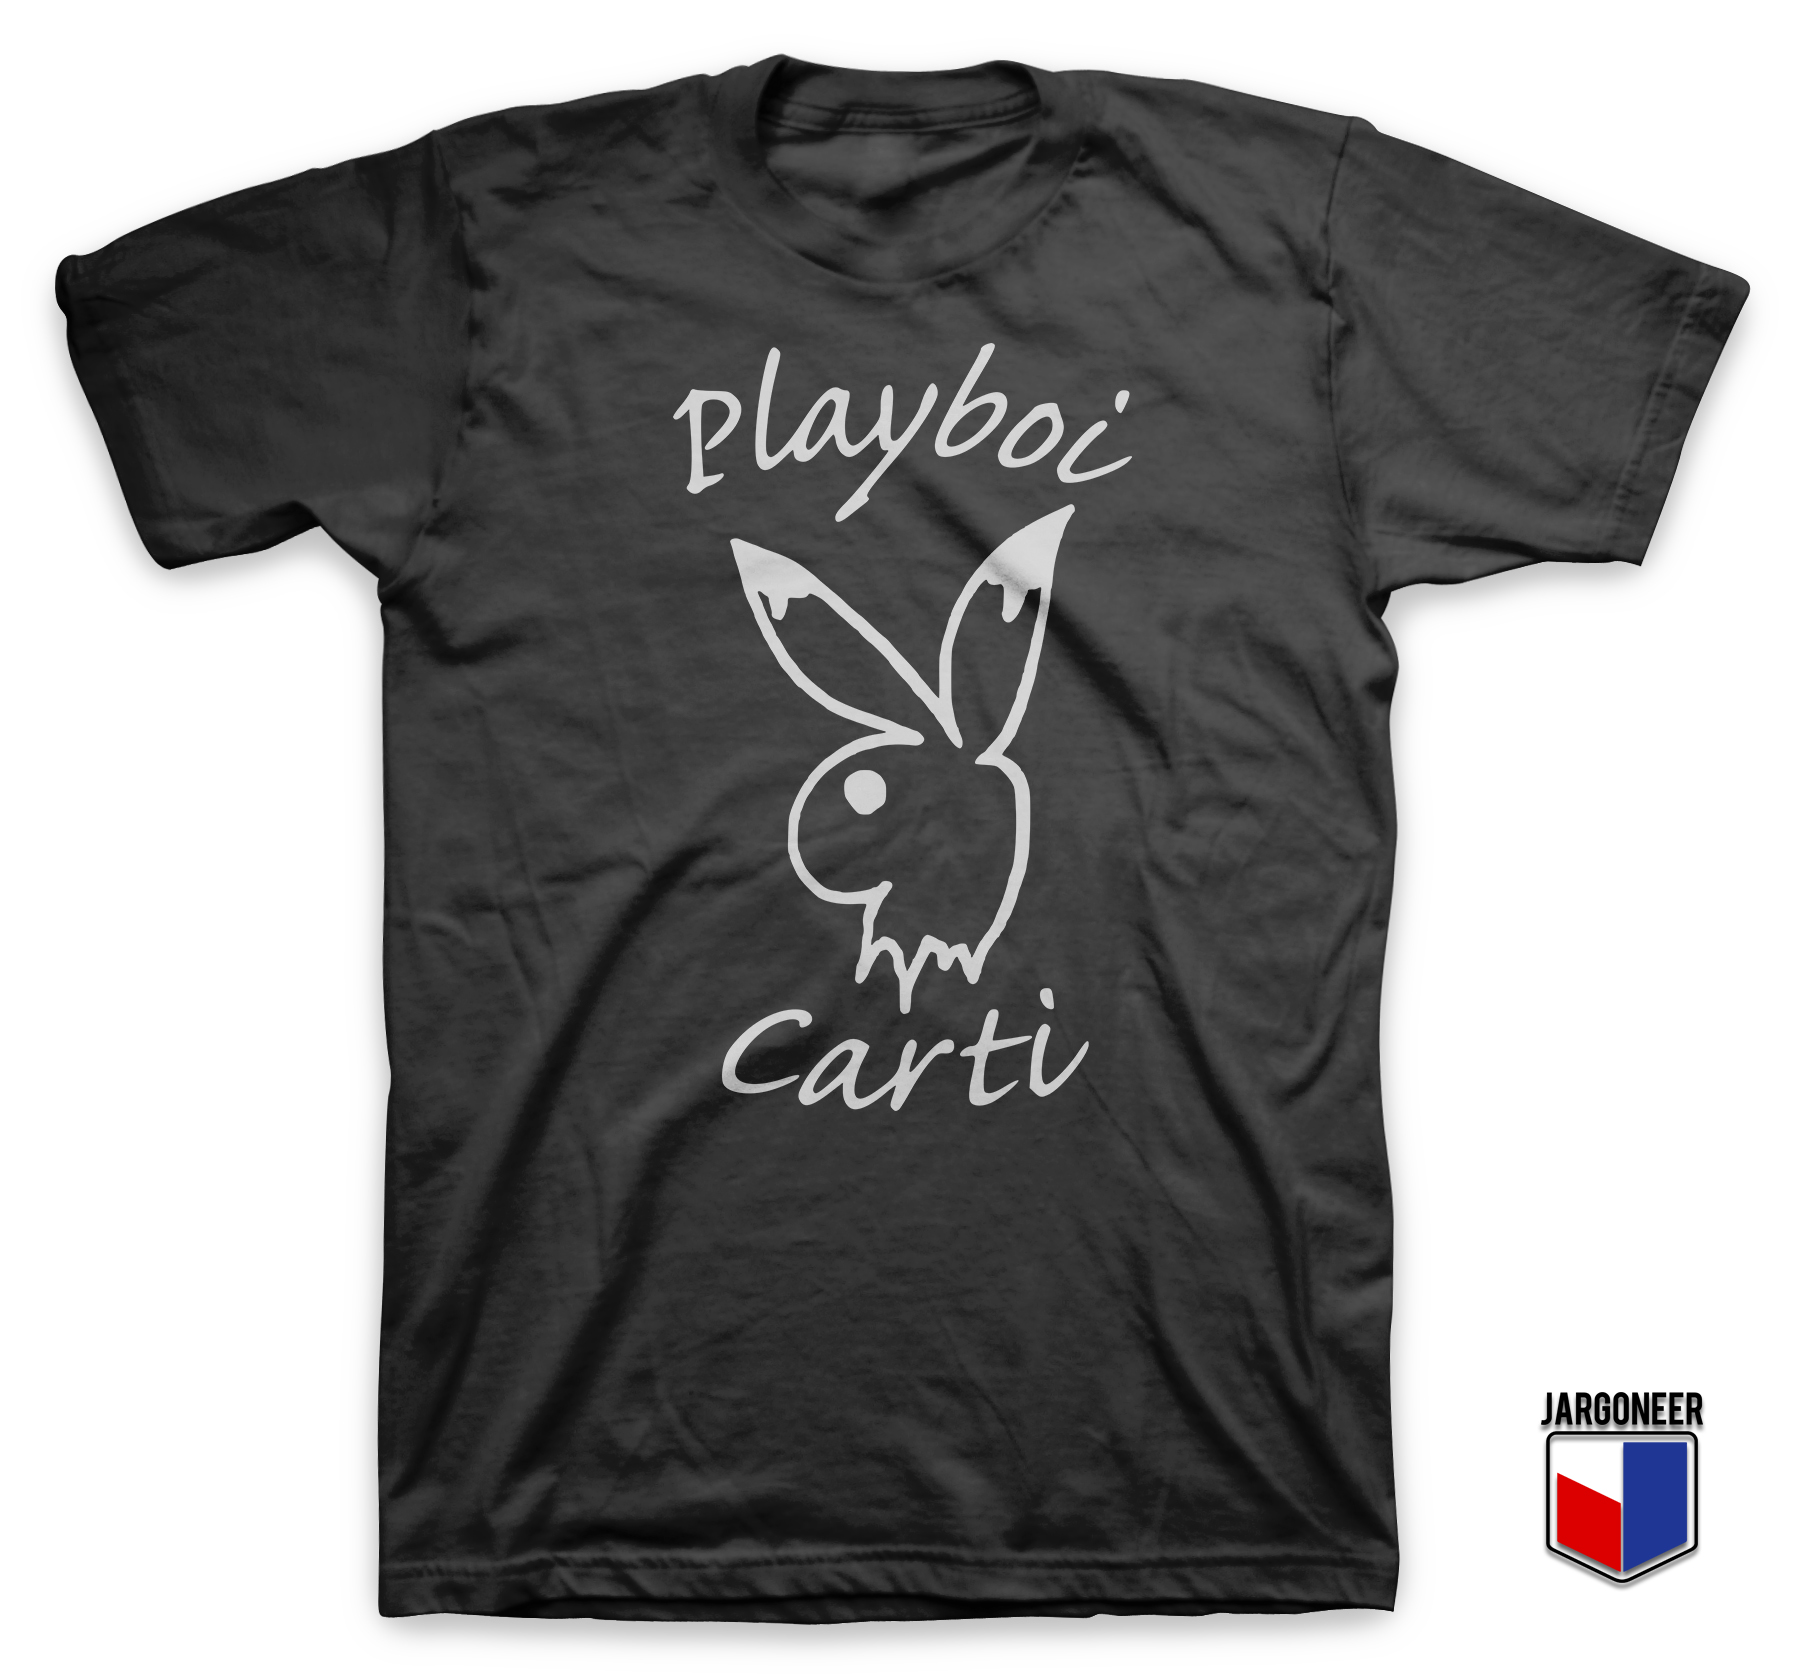 Playboi Carti Logo - Shop Unique Graphic Cool Shirt Designs